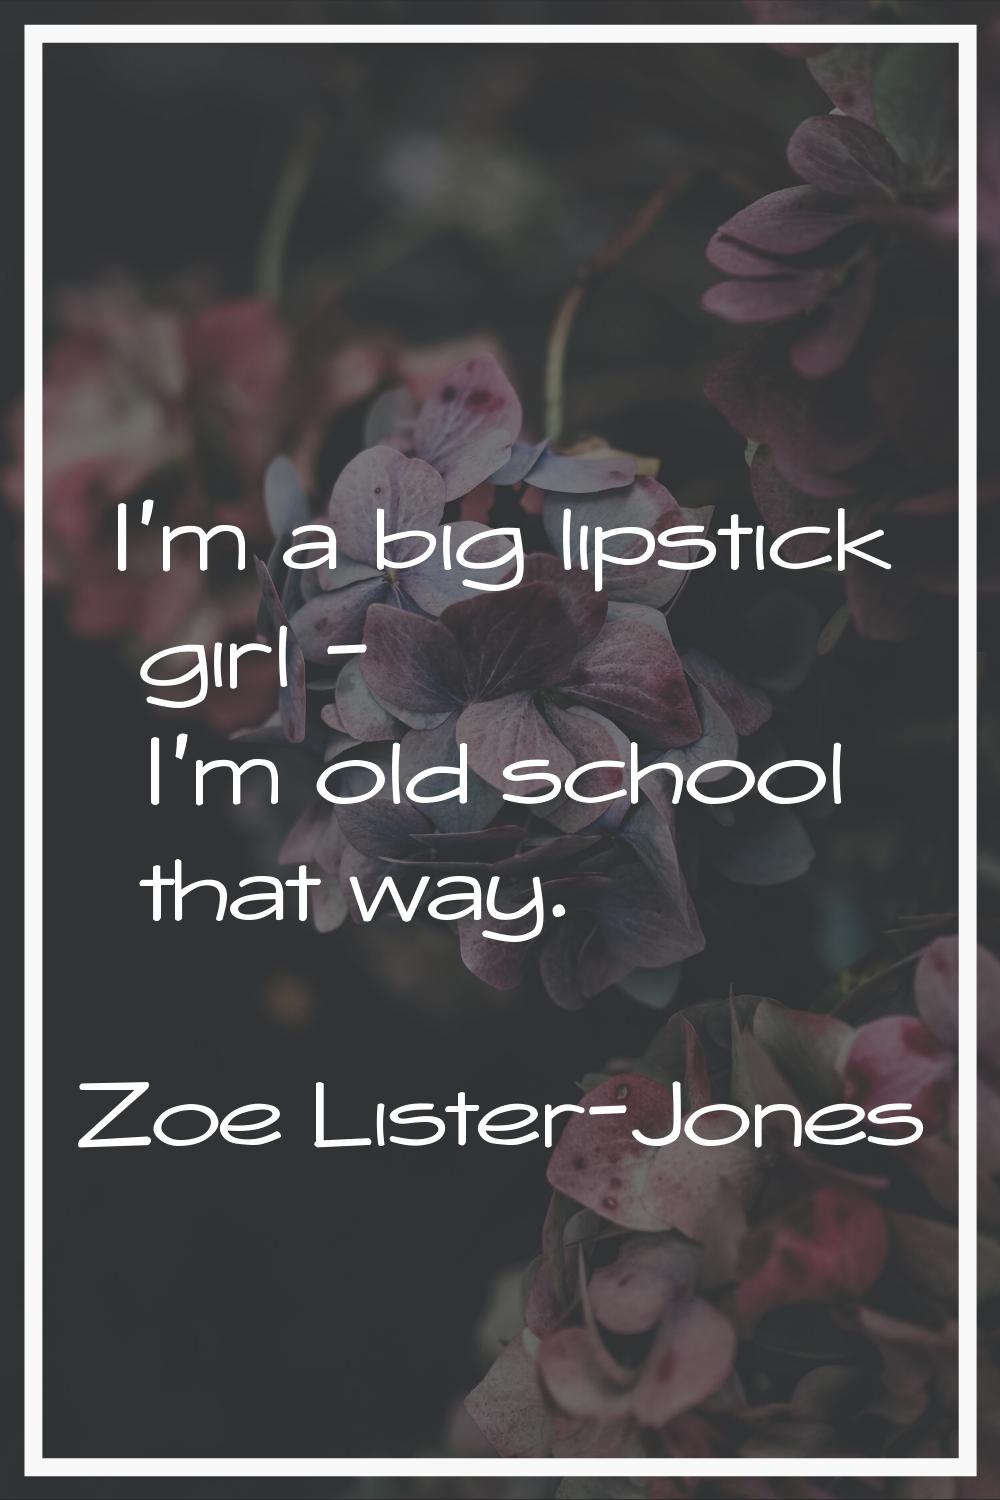 I'm a big lipstick girl - I'm old school that way.